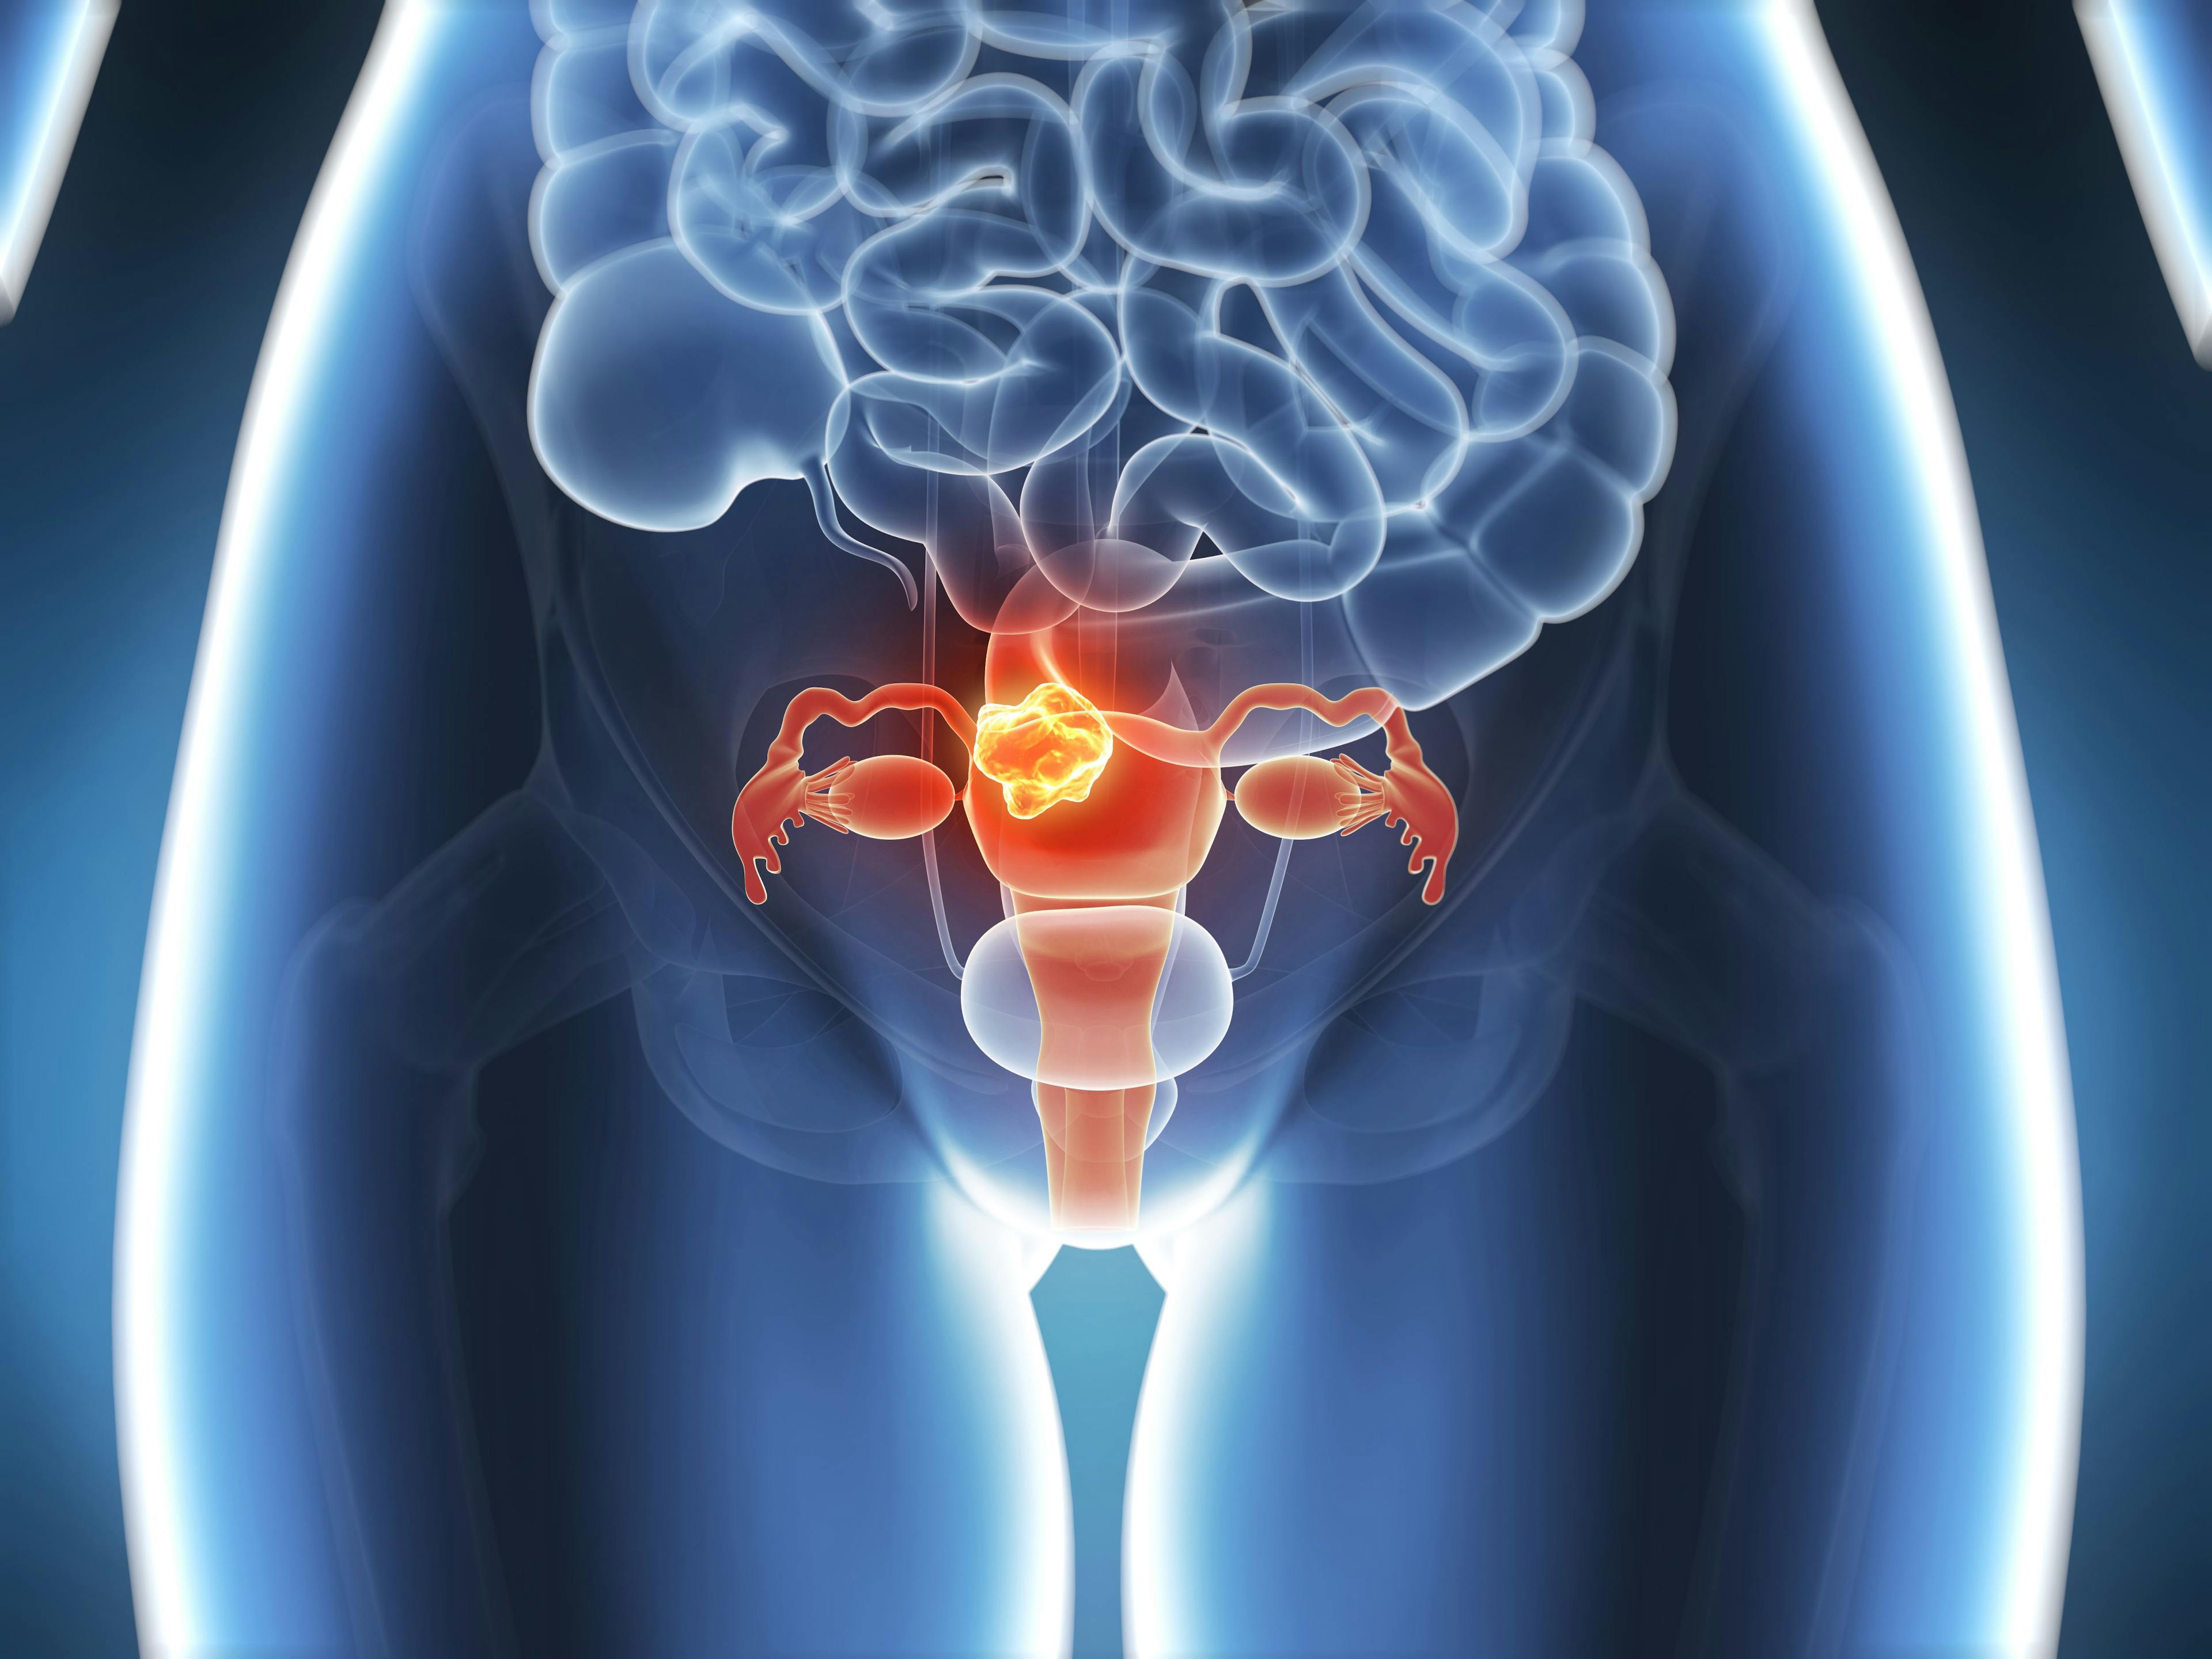 Illustration of gynecologic cancer - stock.adobe.com